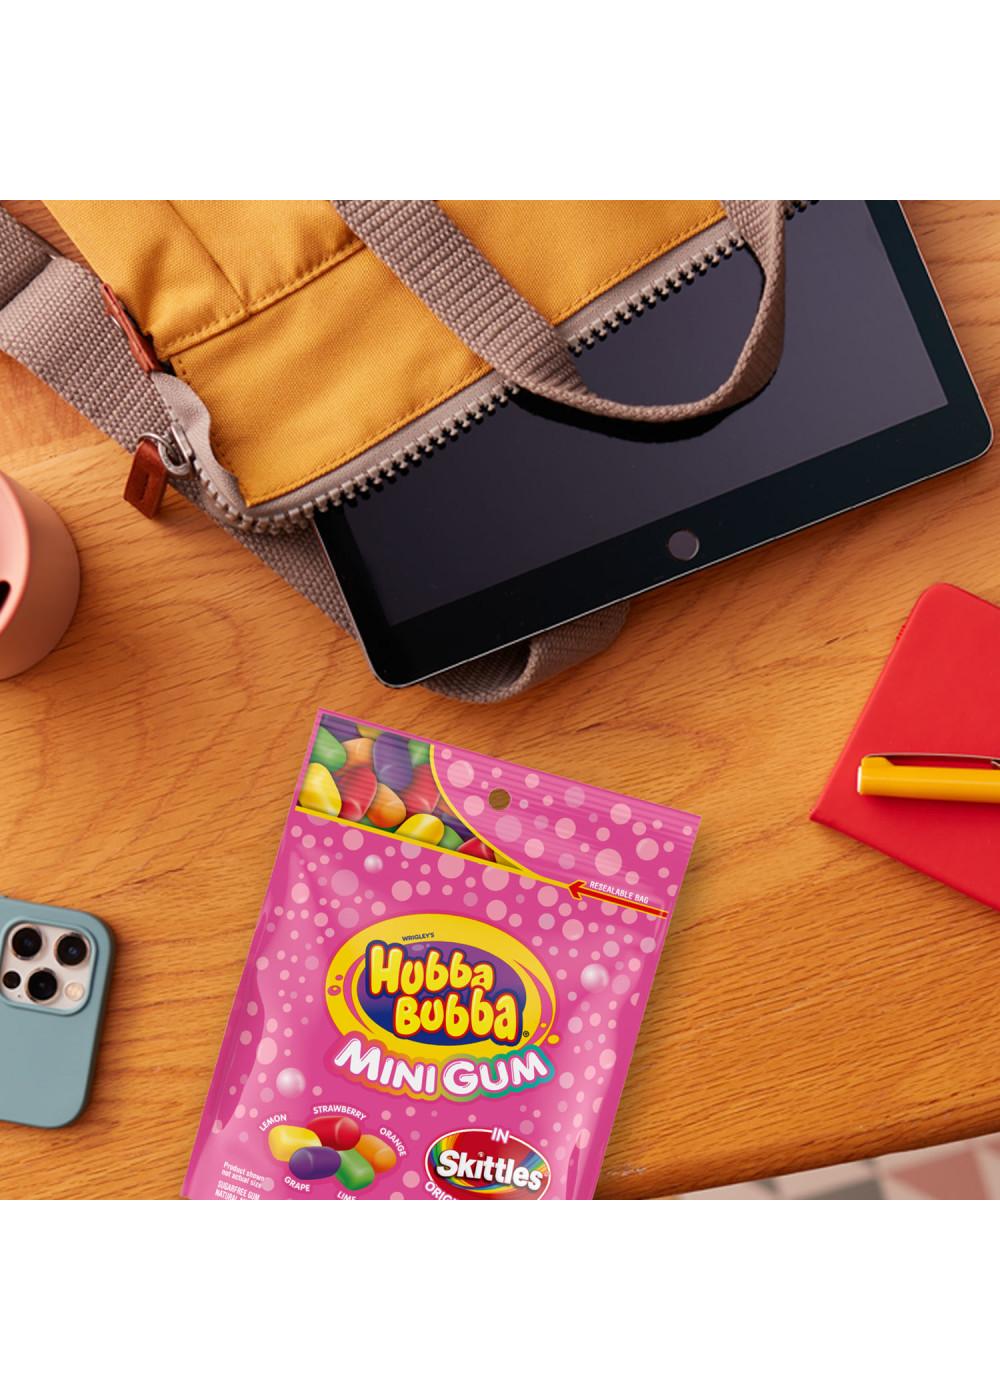 Hubba Bubba Skittles Flavored Mini Gum; image 5 of 7